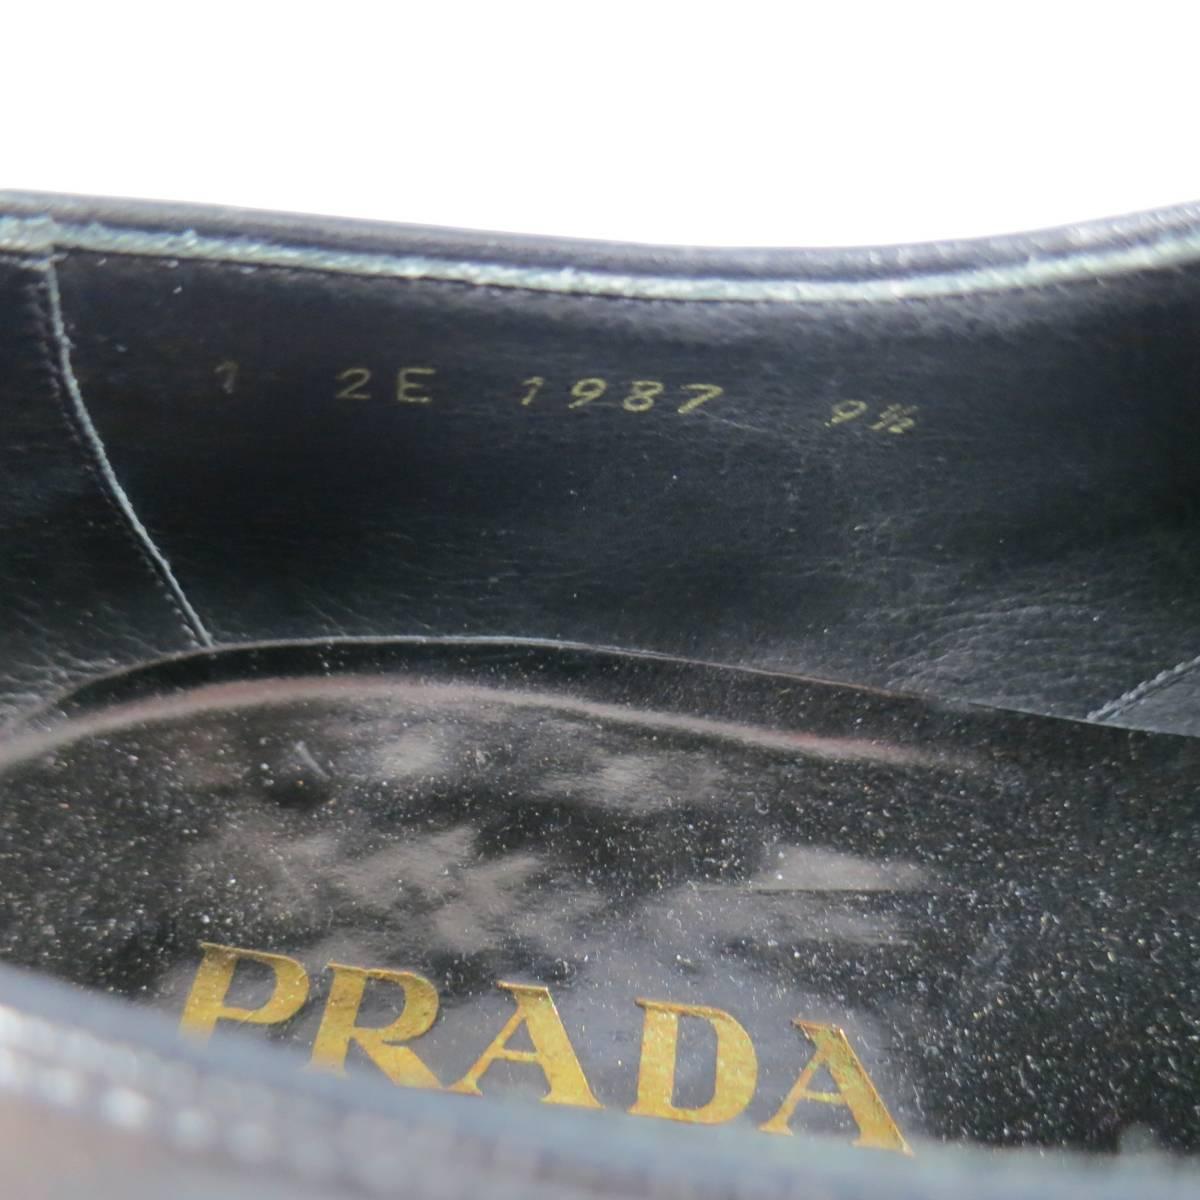 PRADA Size 11.5 Black Leather Top Stitch Lace Up Dress Shoes 2